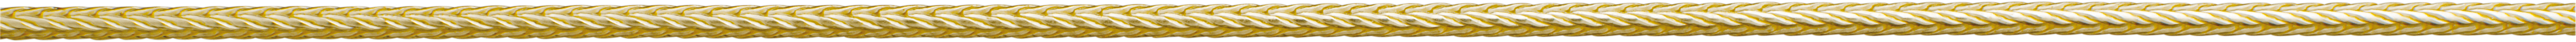 Fox tail chain gold 585/-Gg Ø 1,30mm